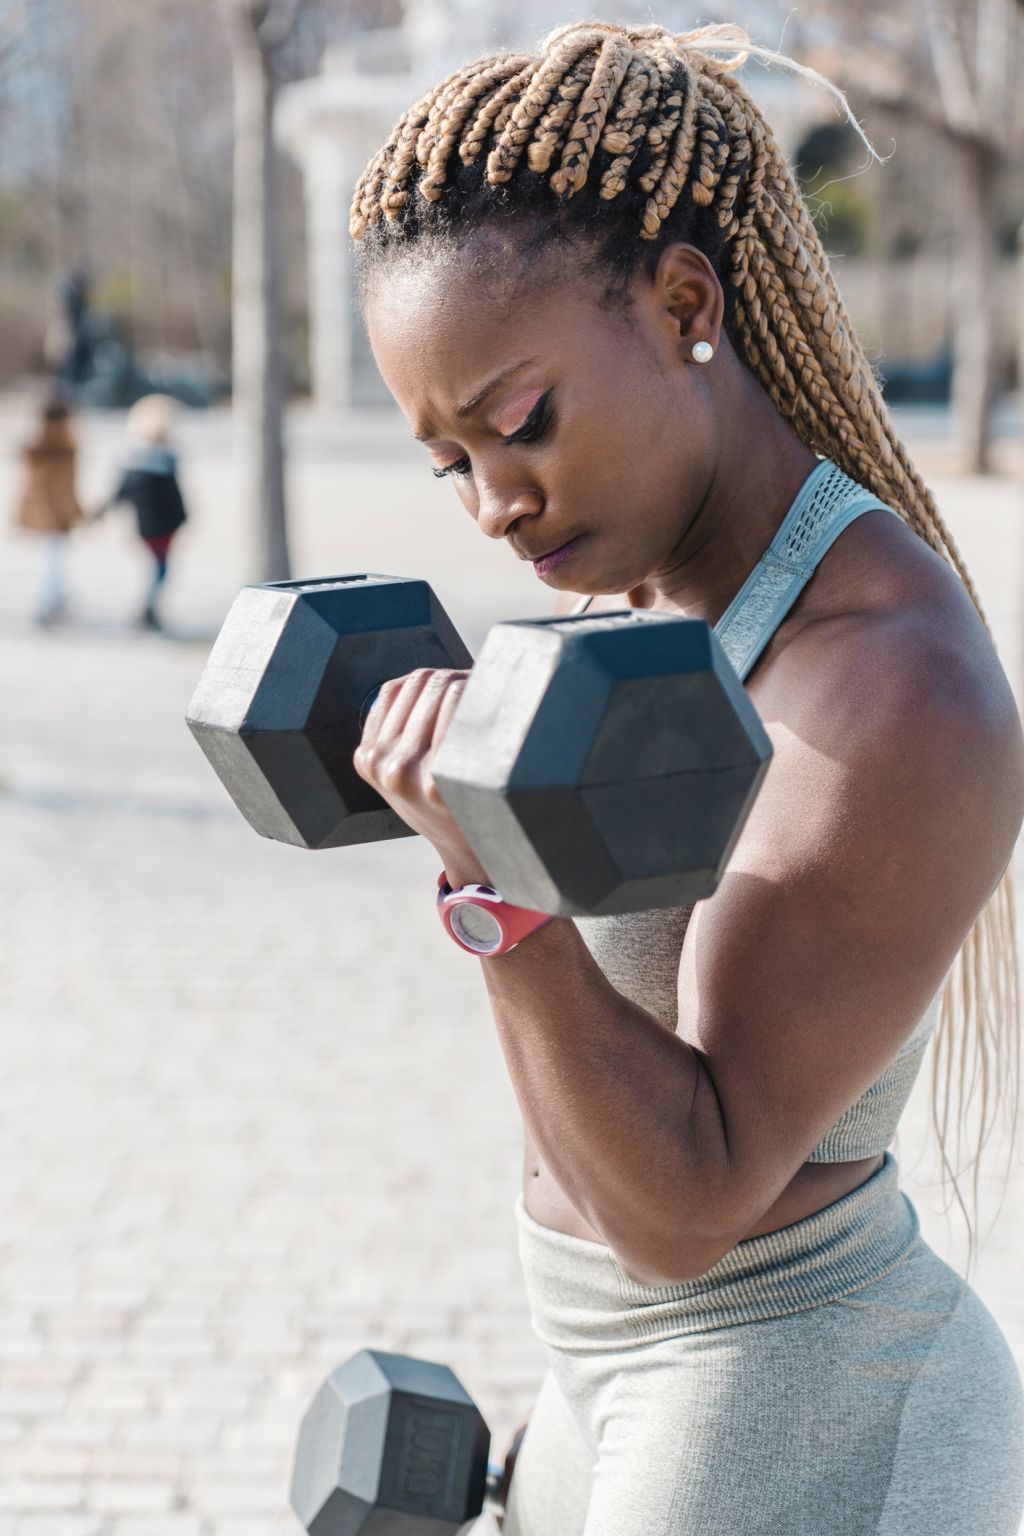 Black female athlete doing exercises with dumbbells on street